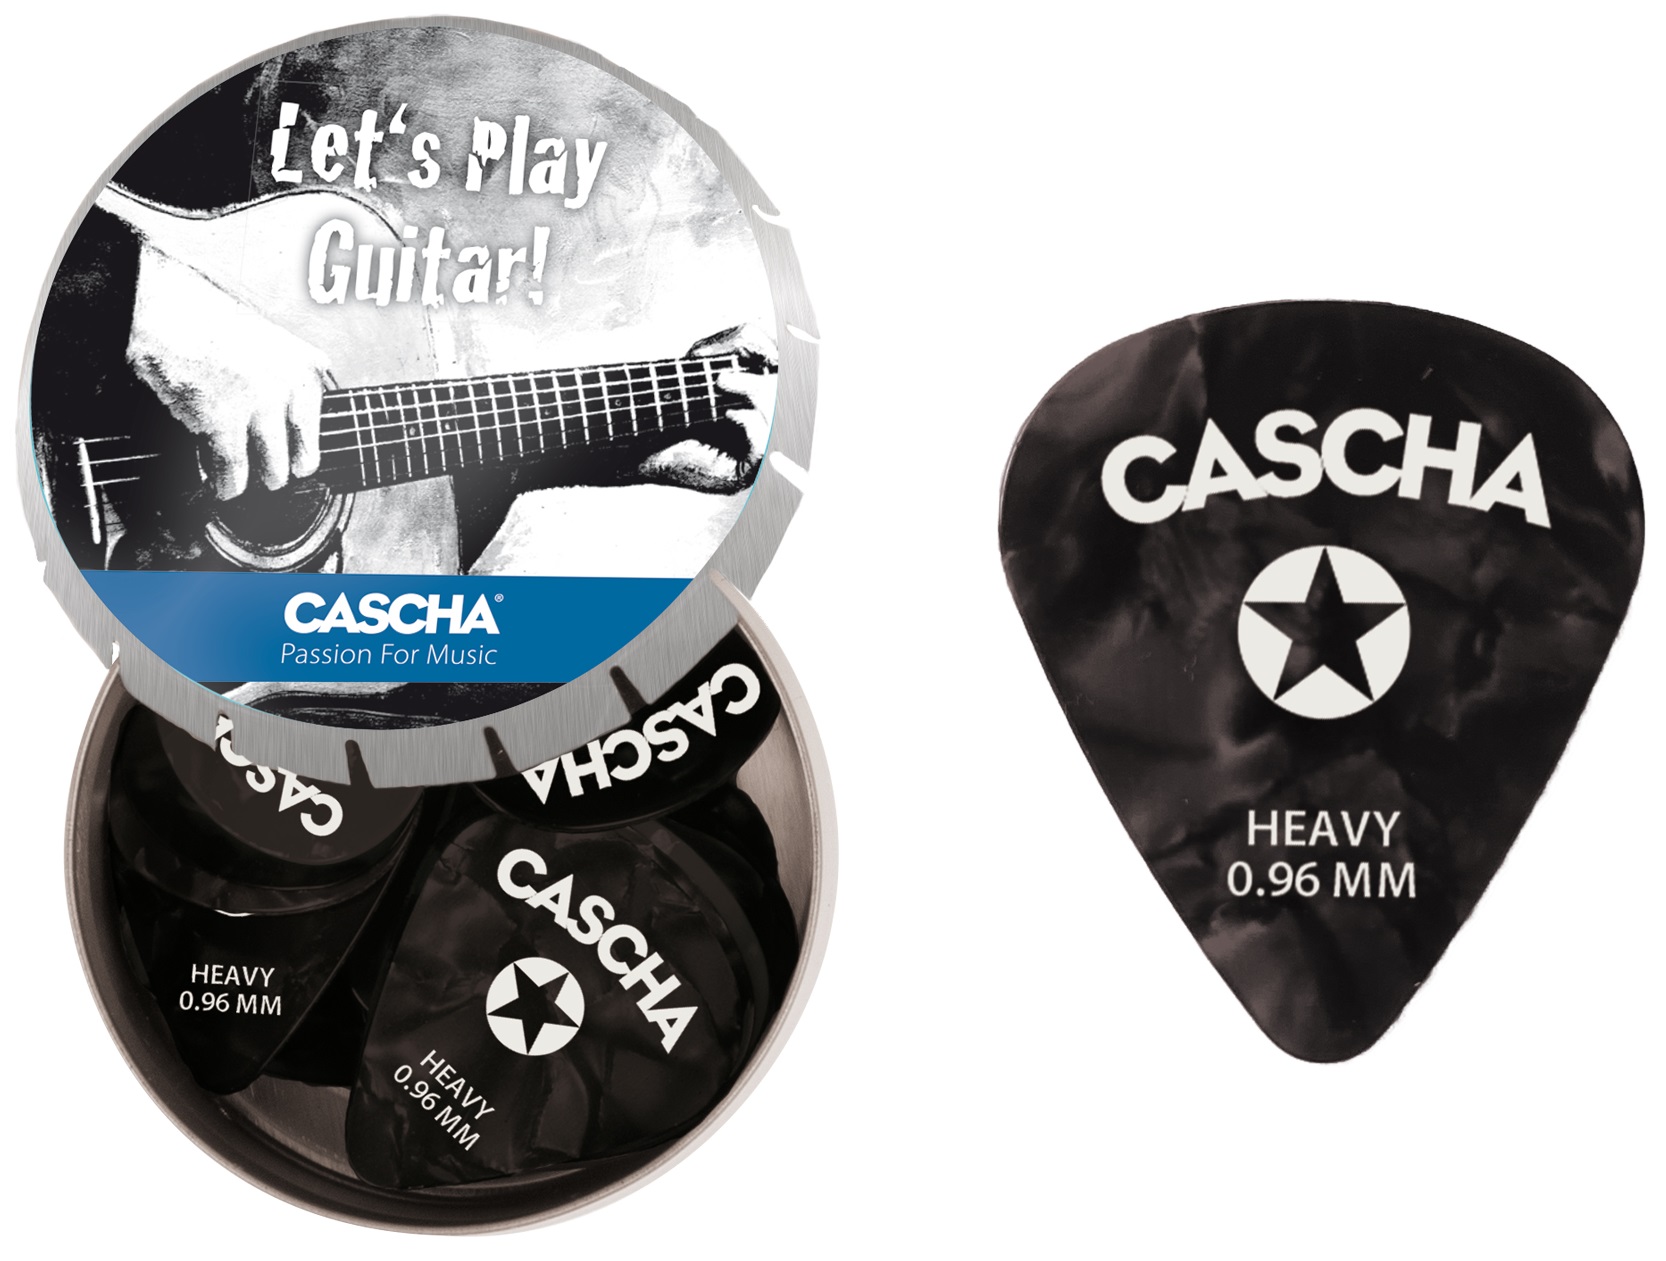 Cascha Guitar Pick Set Box Heavy (24 heavy guitar picks + metal box)